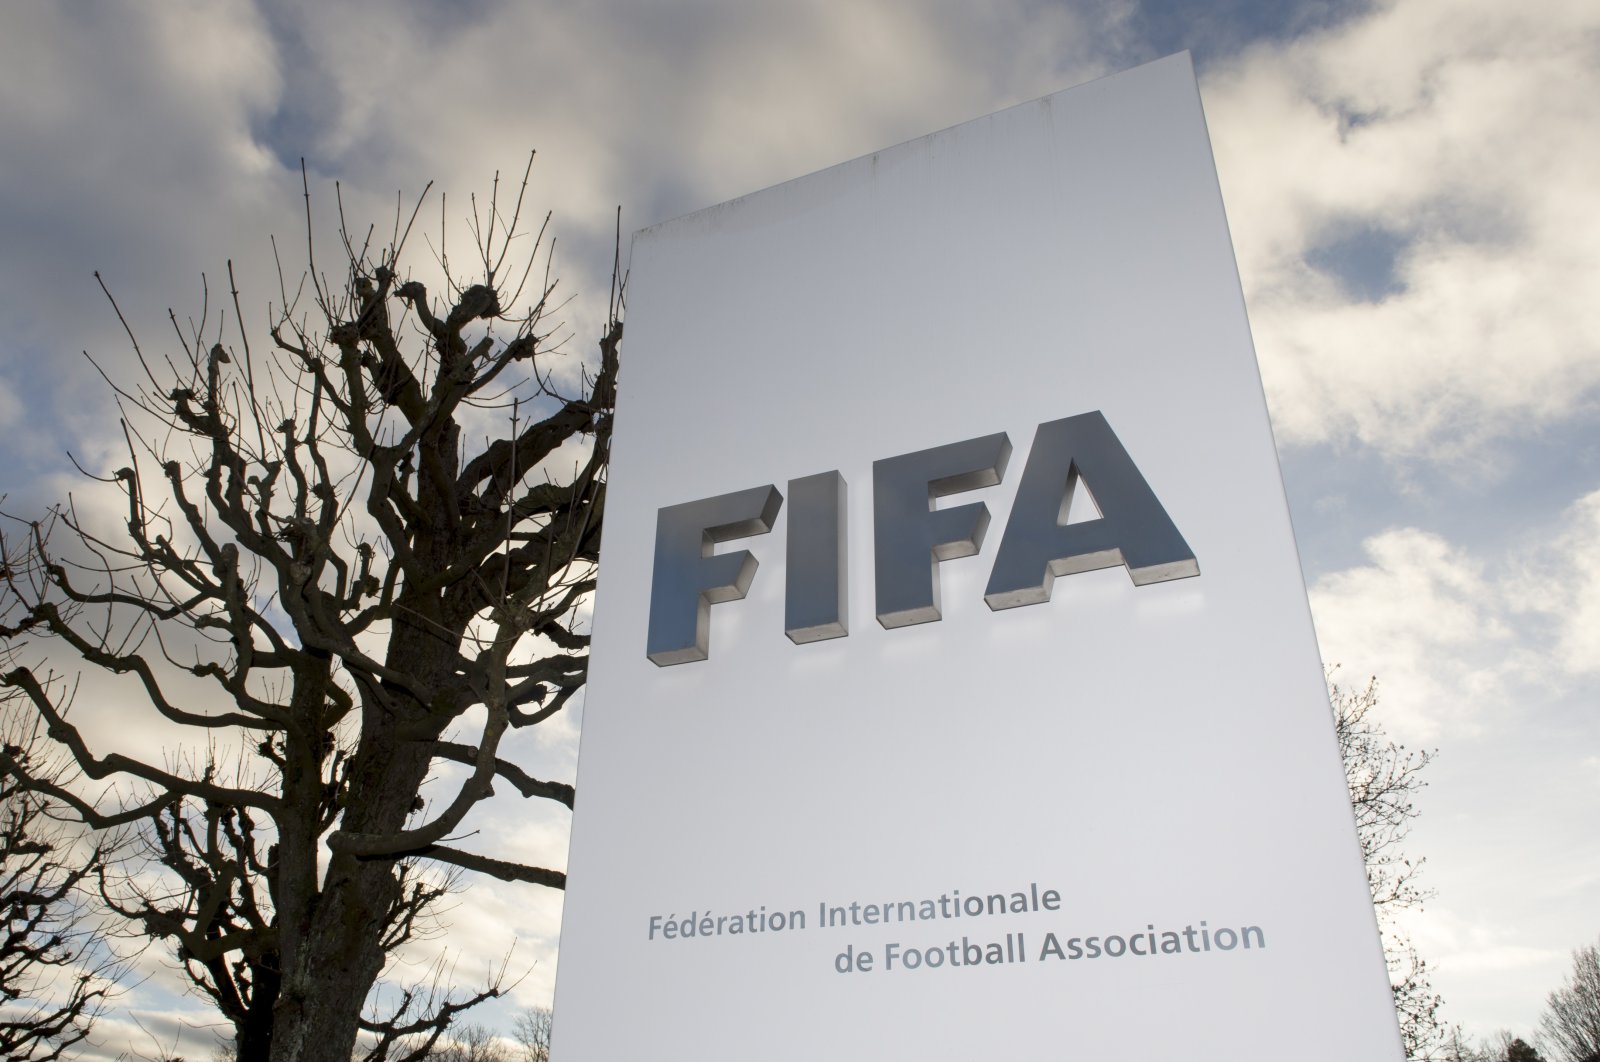 FIFA memulai diskusi tentang alternatif rencana Piala Dunia dua tahunan